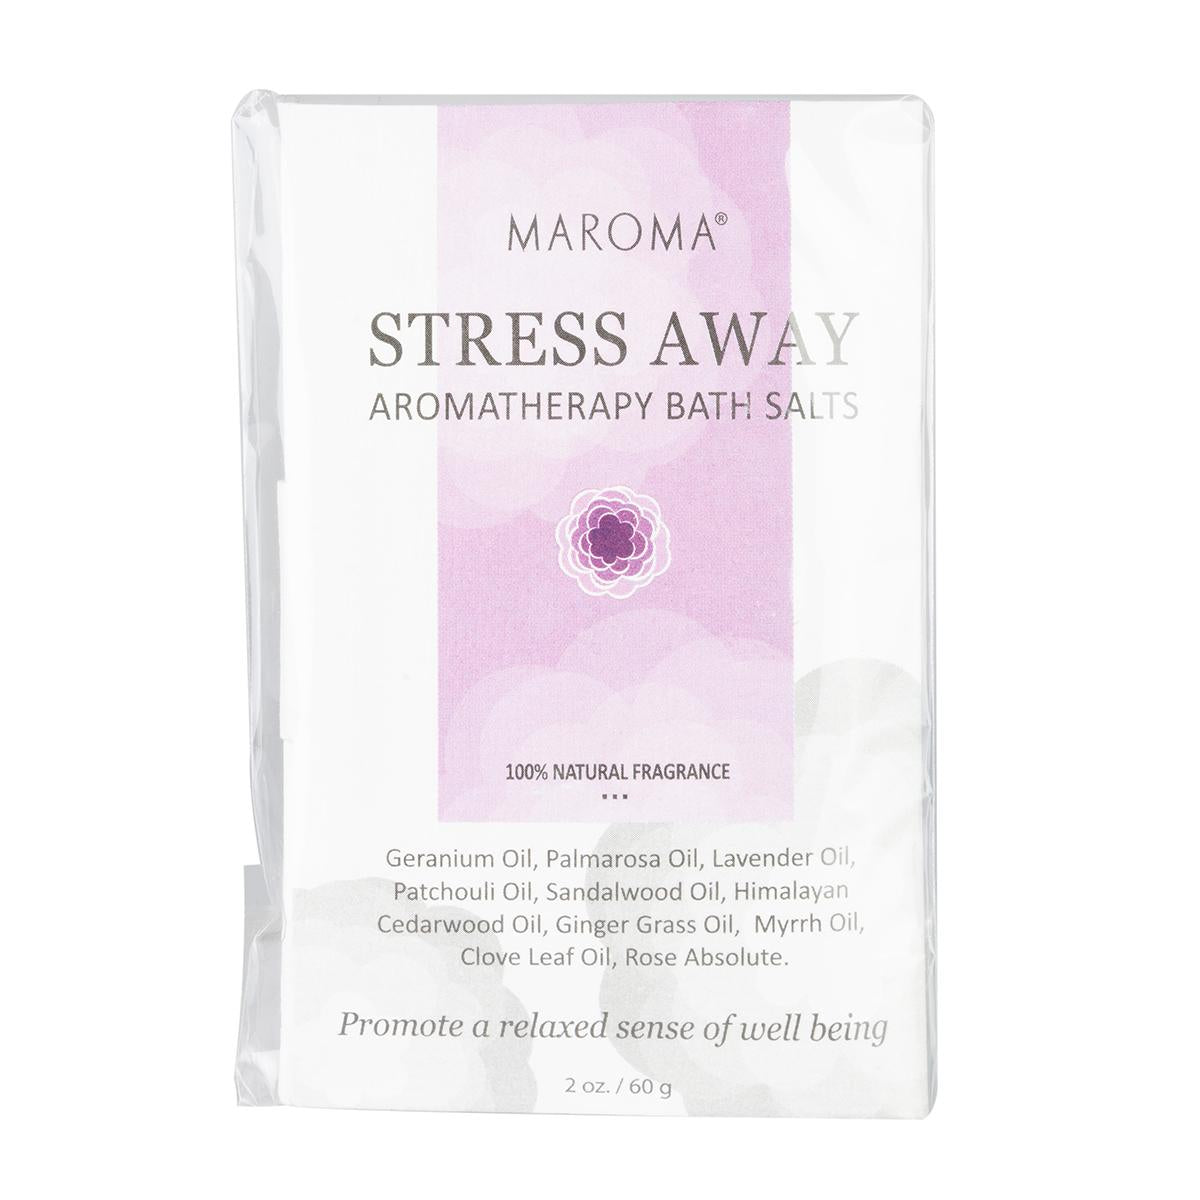 Primary image of Stress Away Aromatherapy Bath Salts